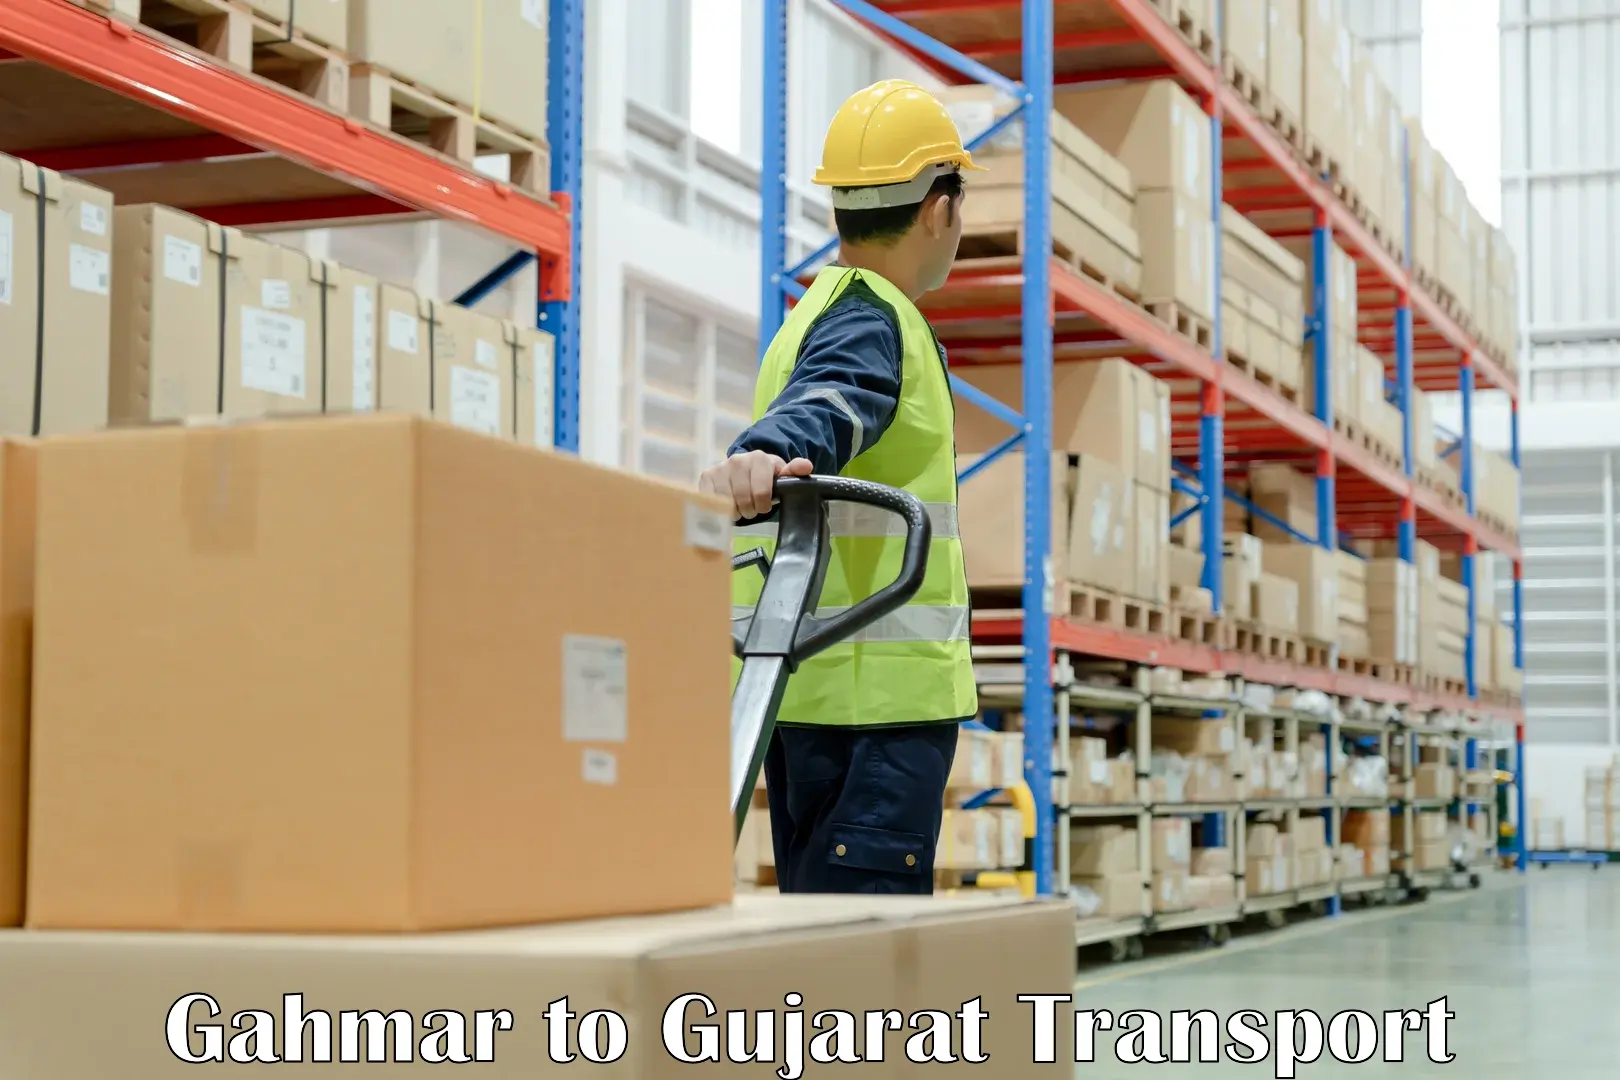 Furniture transport service in Gahmar to Vyara